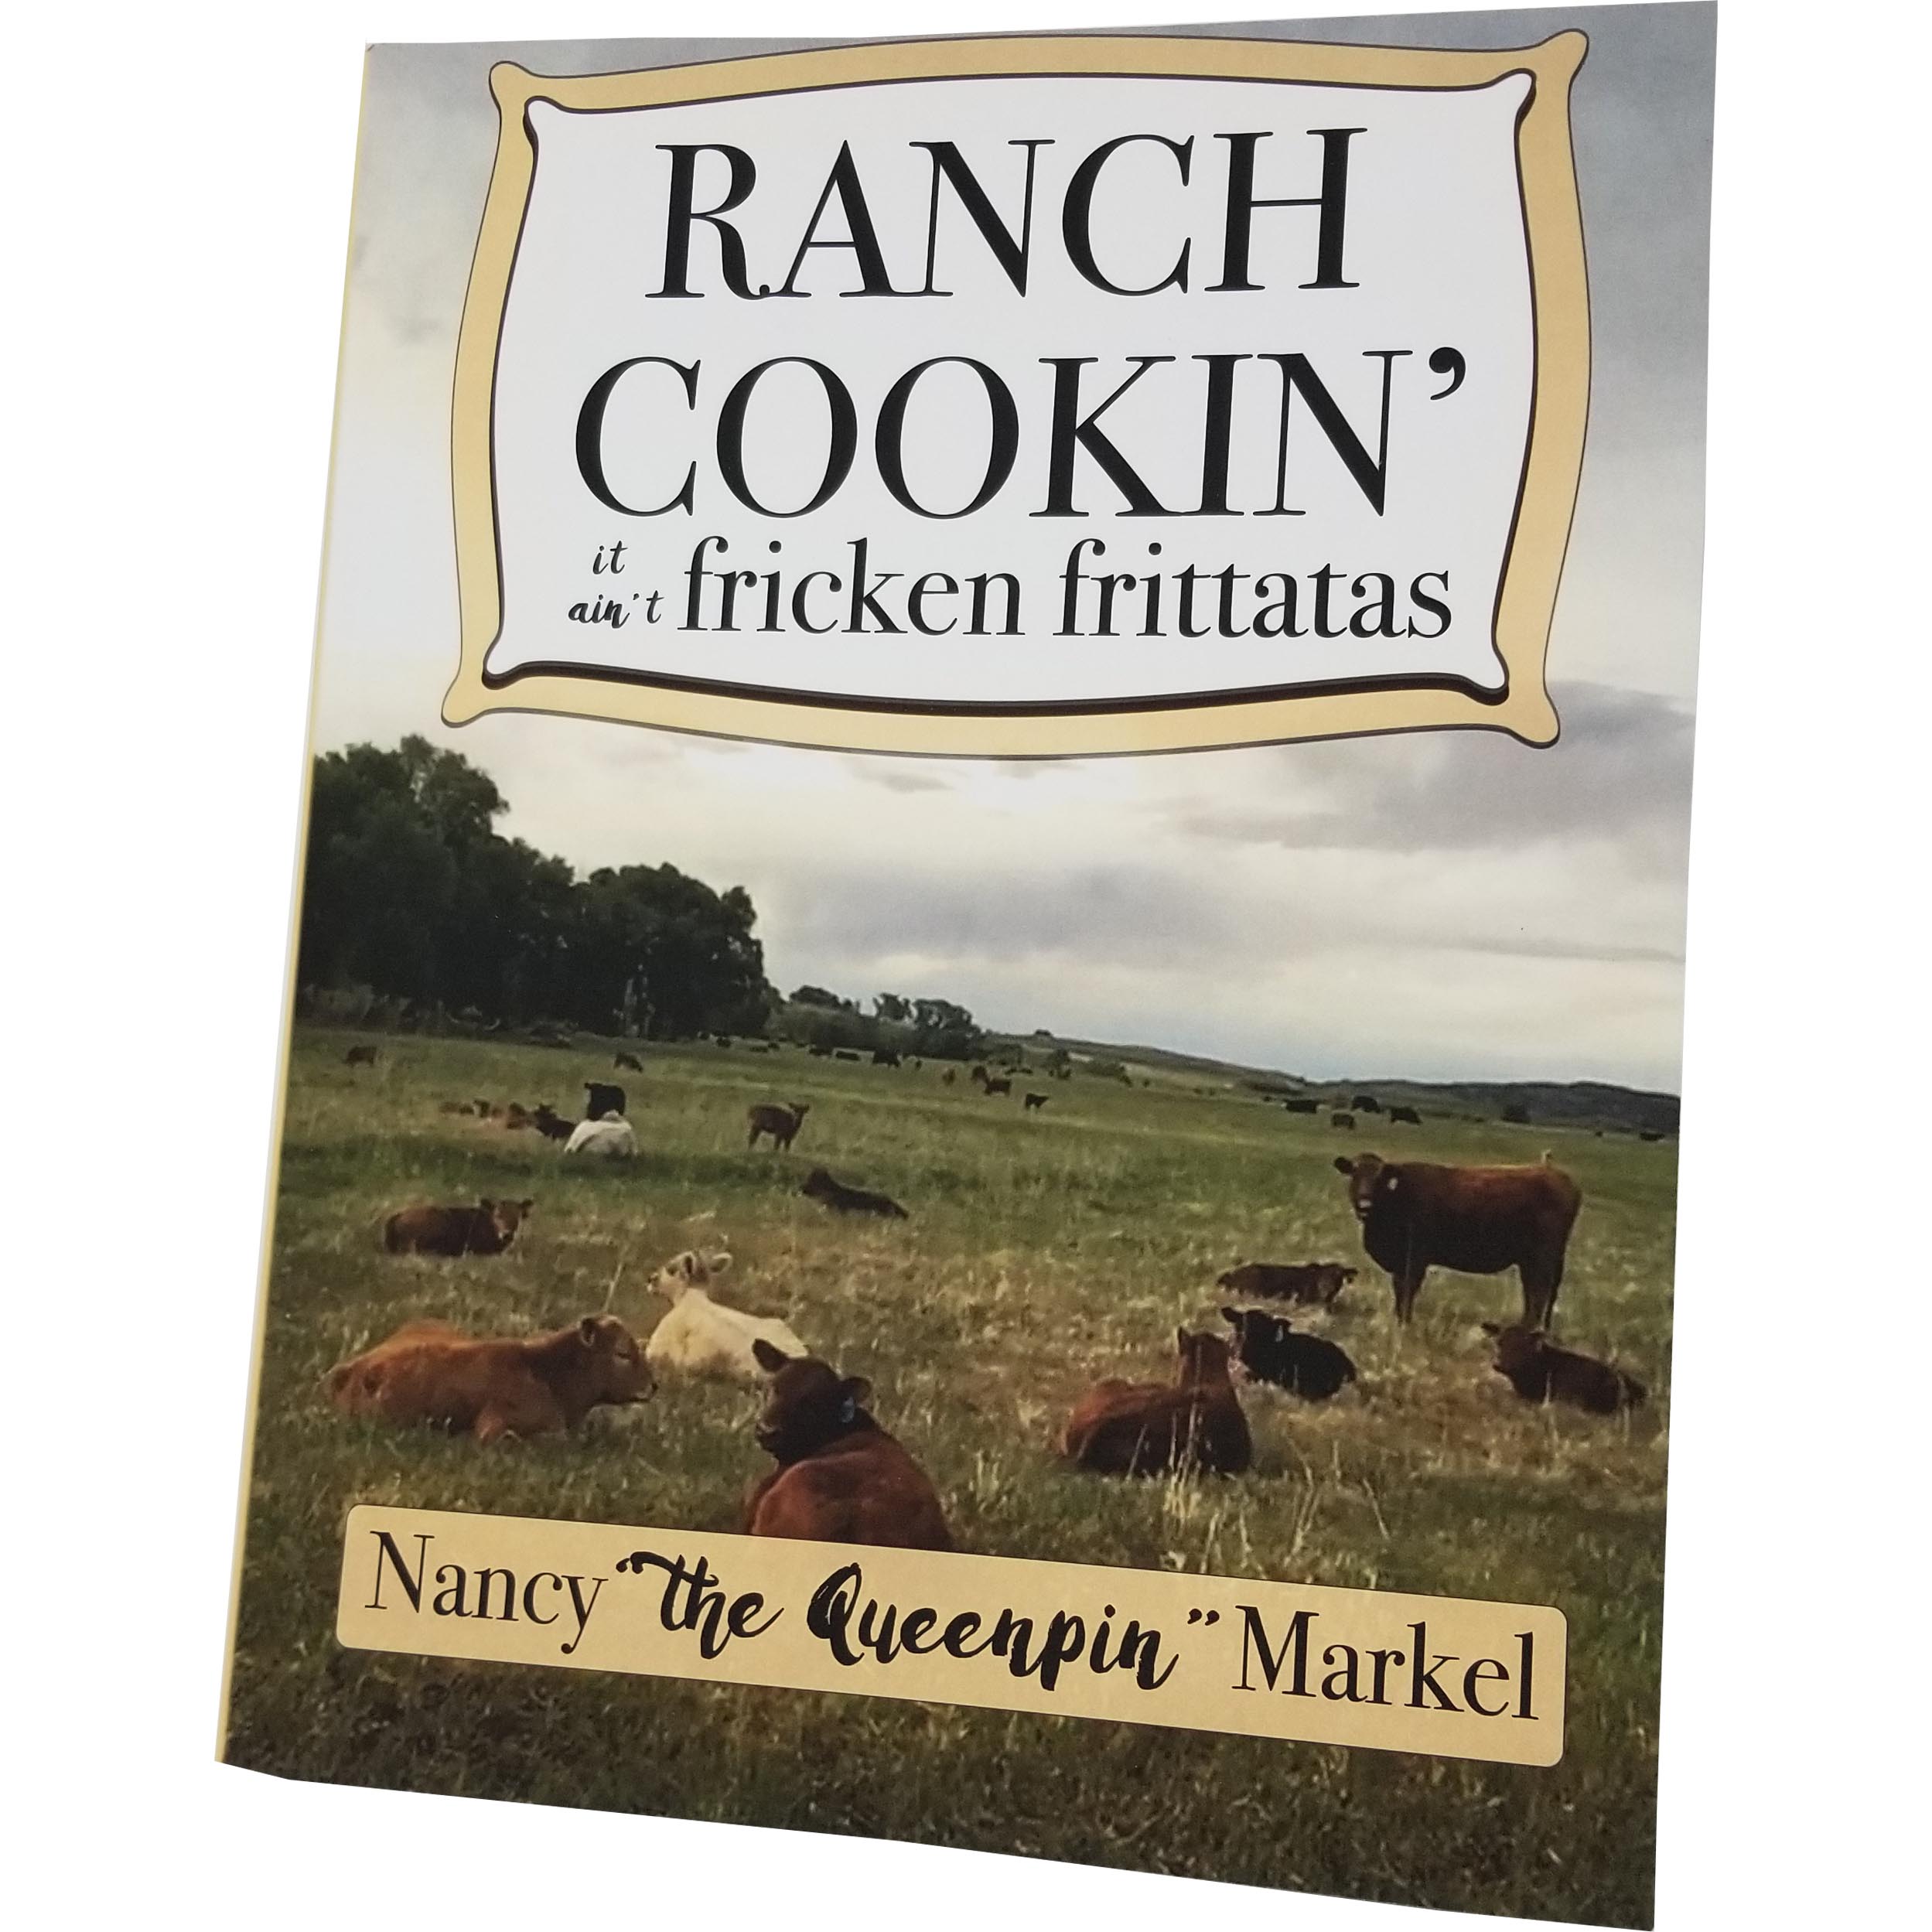 "Ranch Cookin': it ain't fricken frittatas" Cookbook